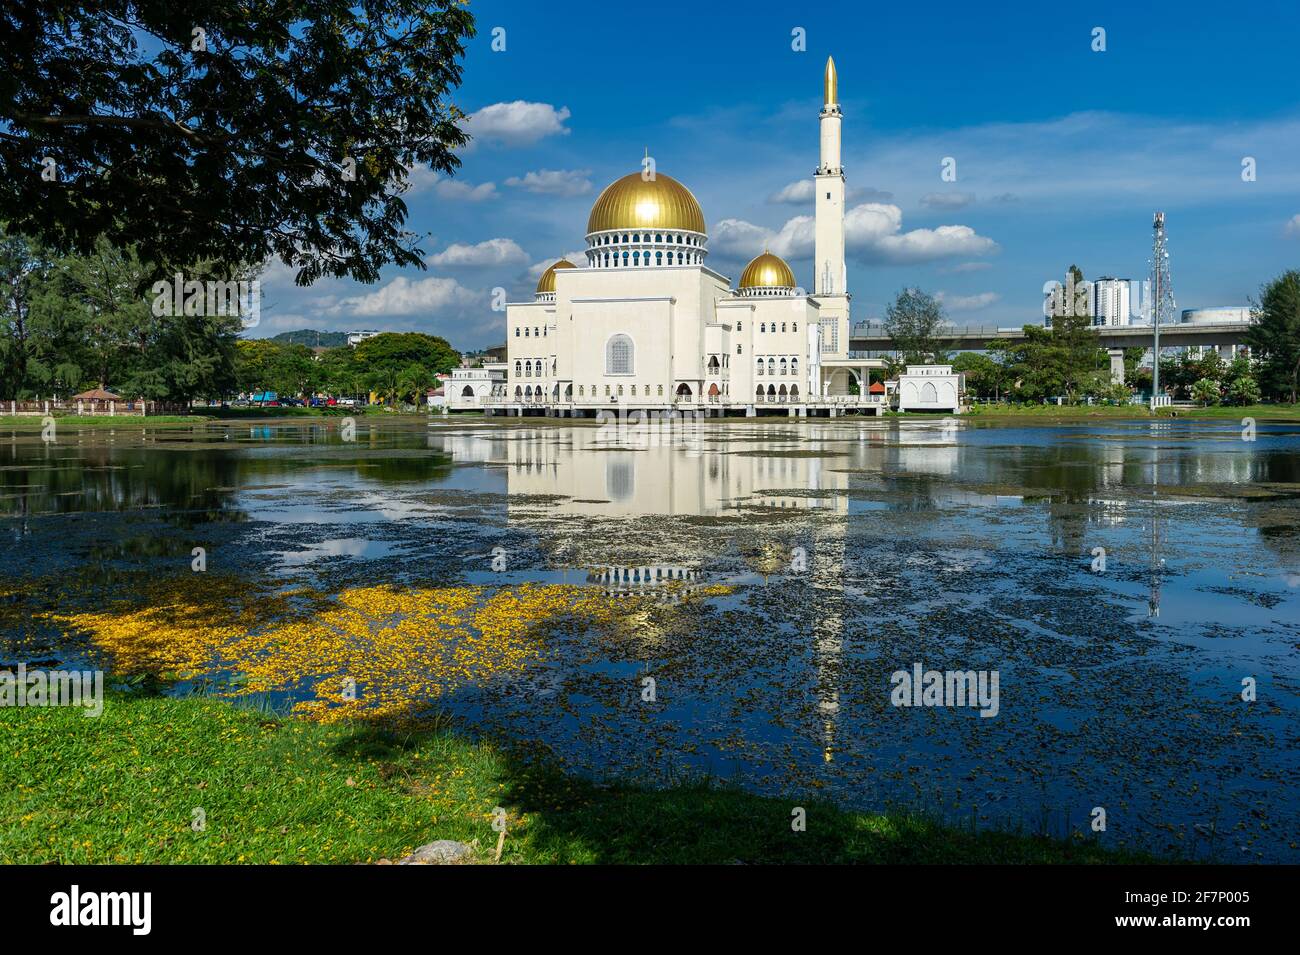 Mosquée Puchong Perdana, Selangor, Malaisie Banque D'Images